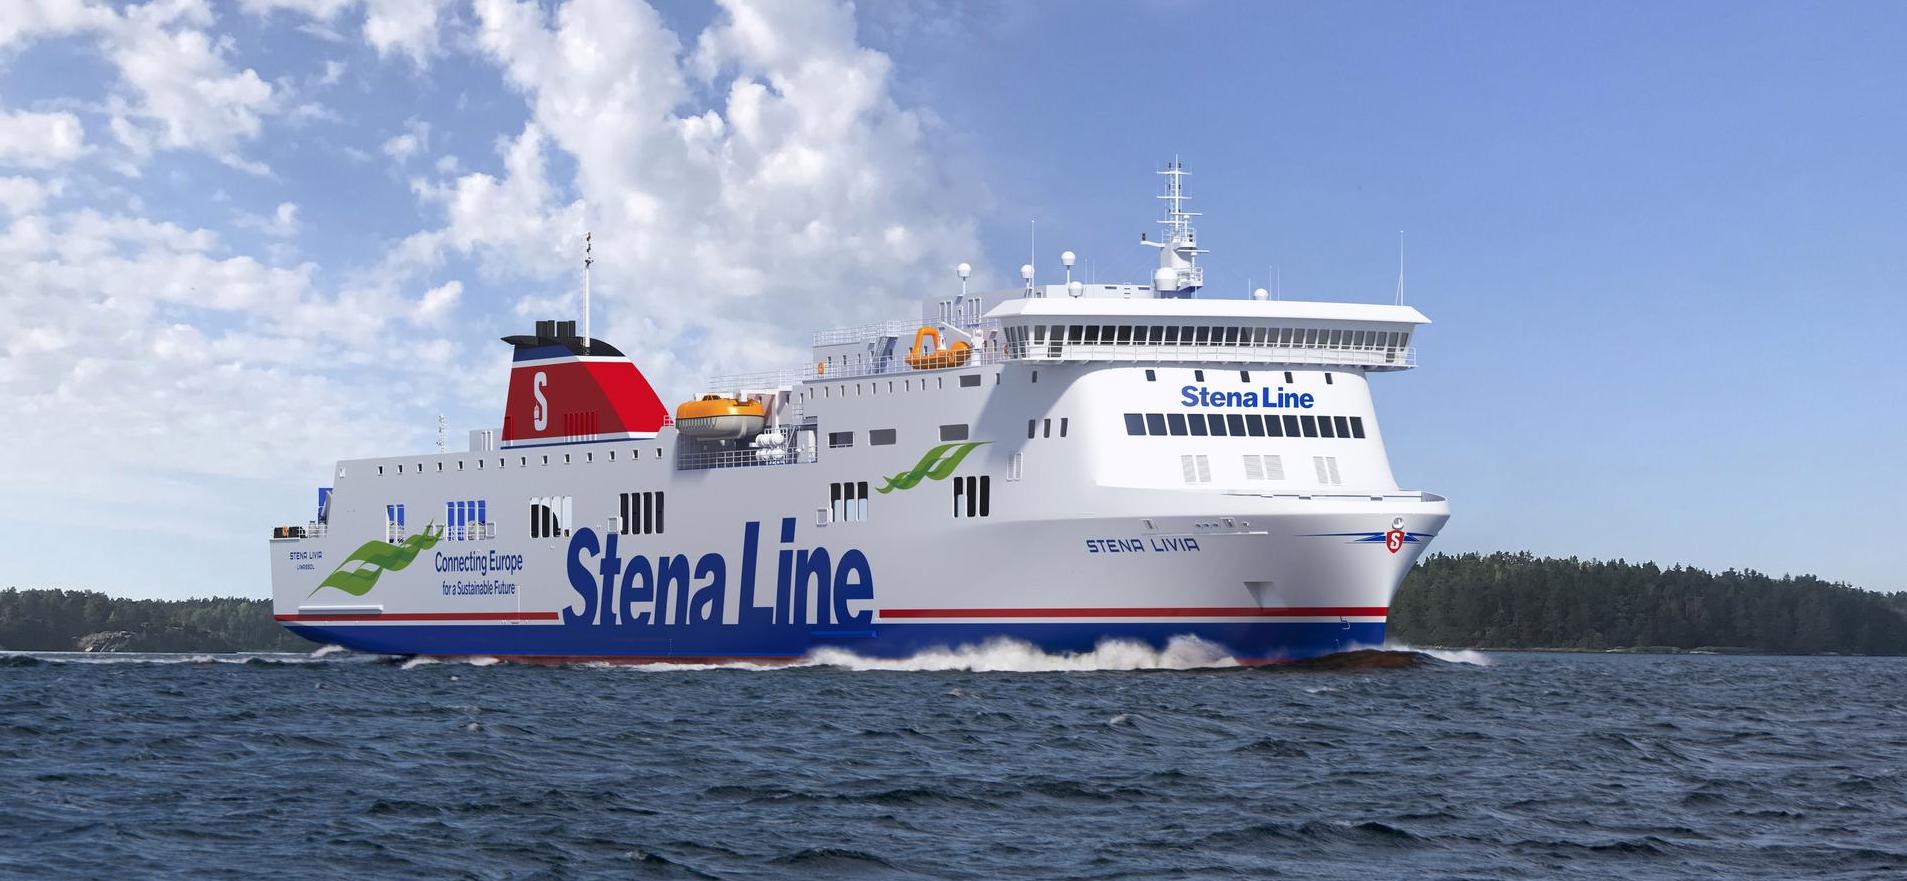 Фотография Stena Line в Stena Livia судна